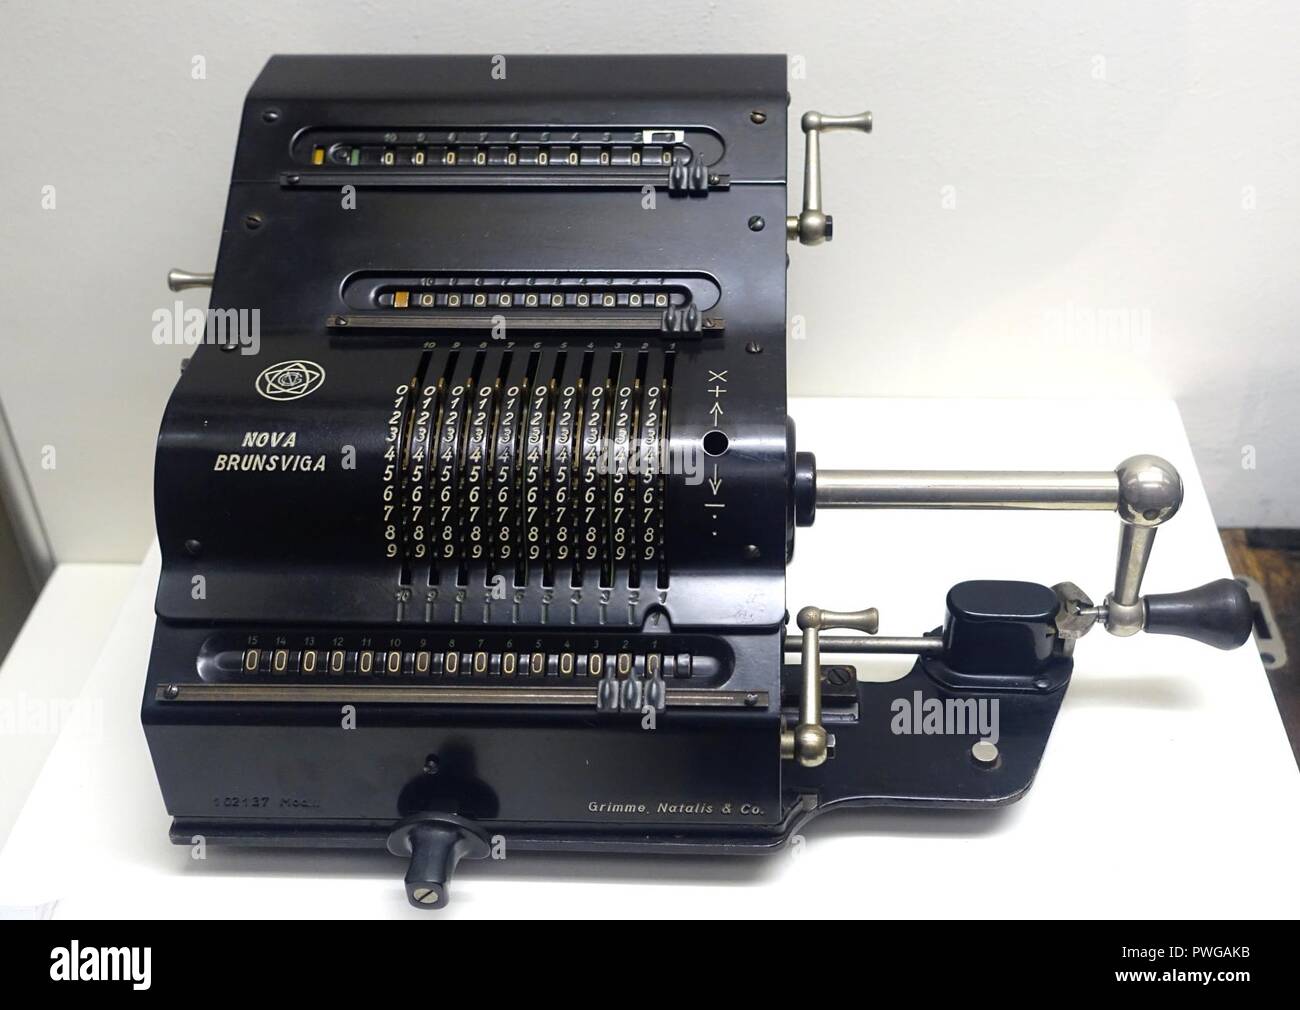 Brunsviga Nova II calcolatrice, Braunschweig, 1926 - Annuncio Foto stock -  Alamy